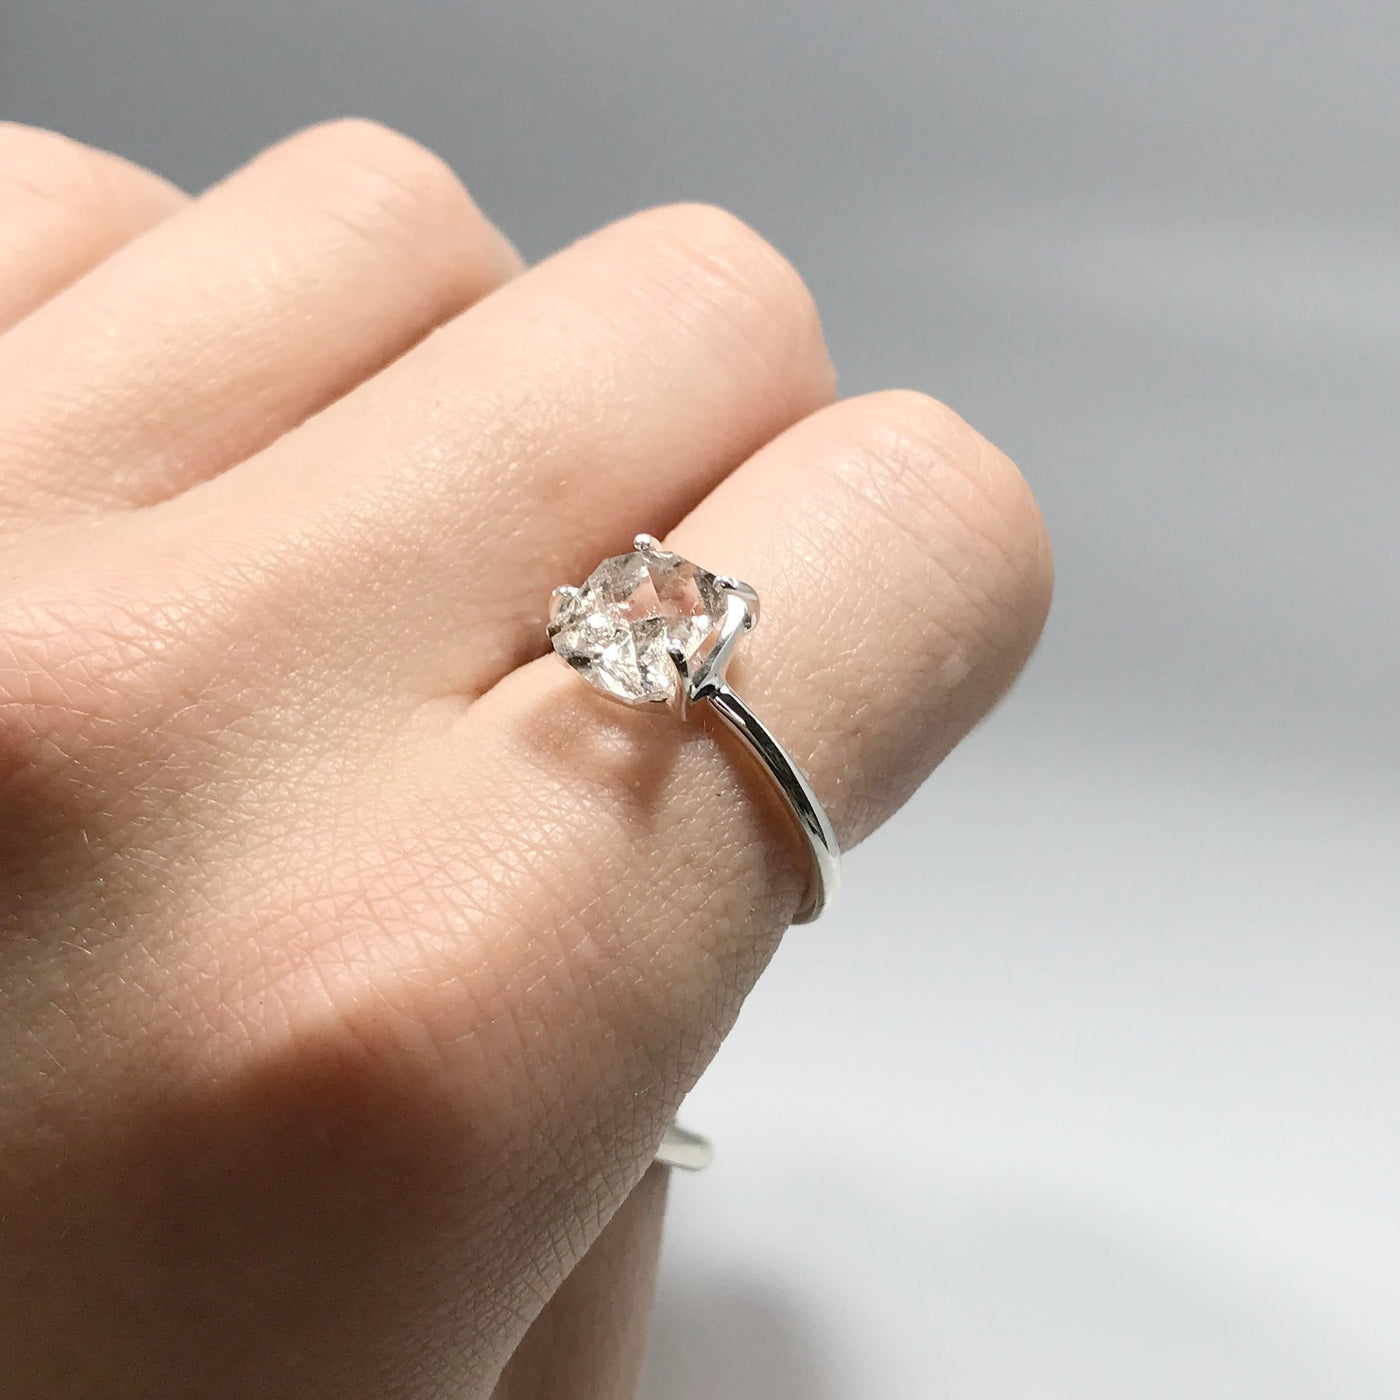 Herkimer Diamond Ring at $79 each